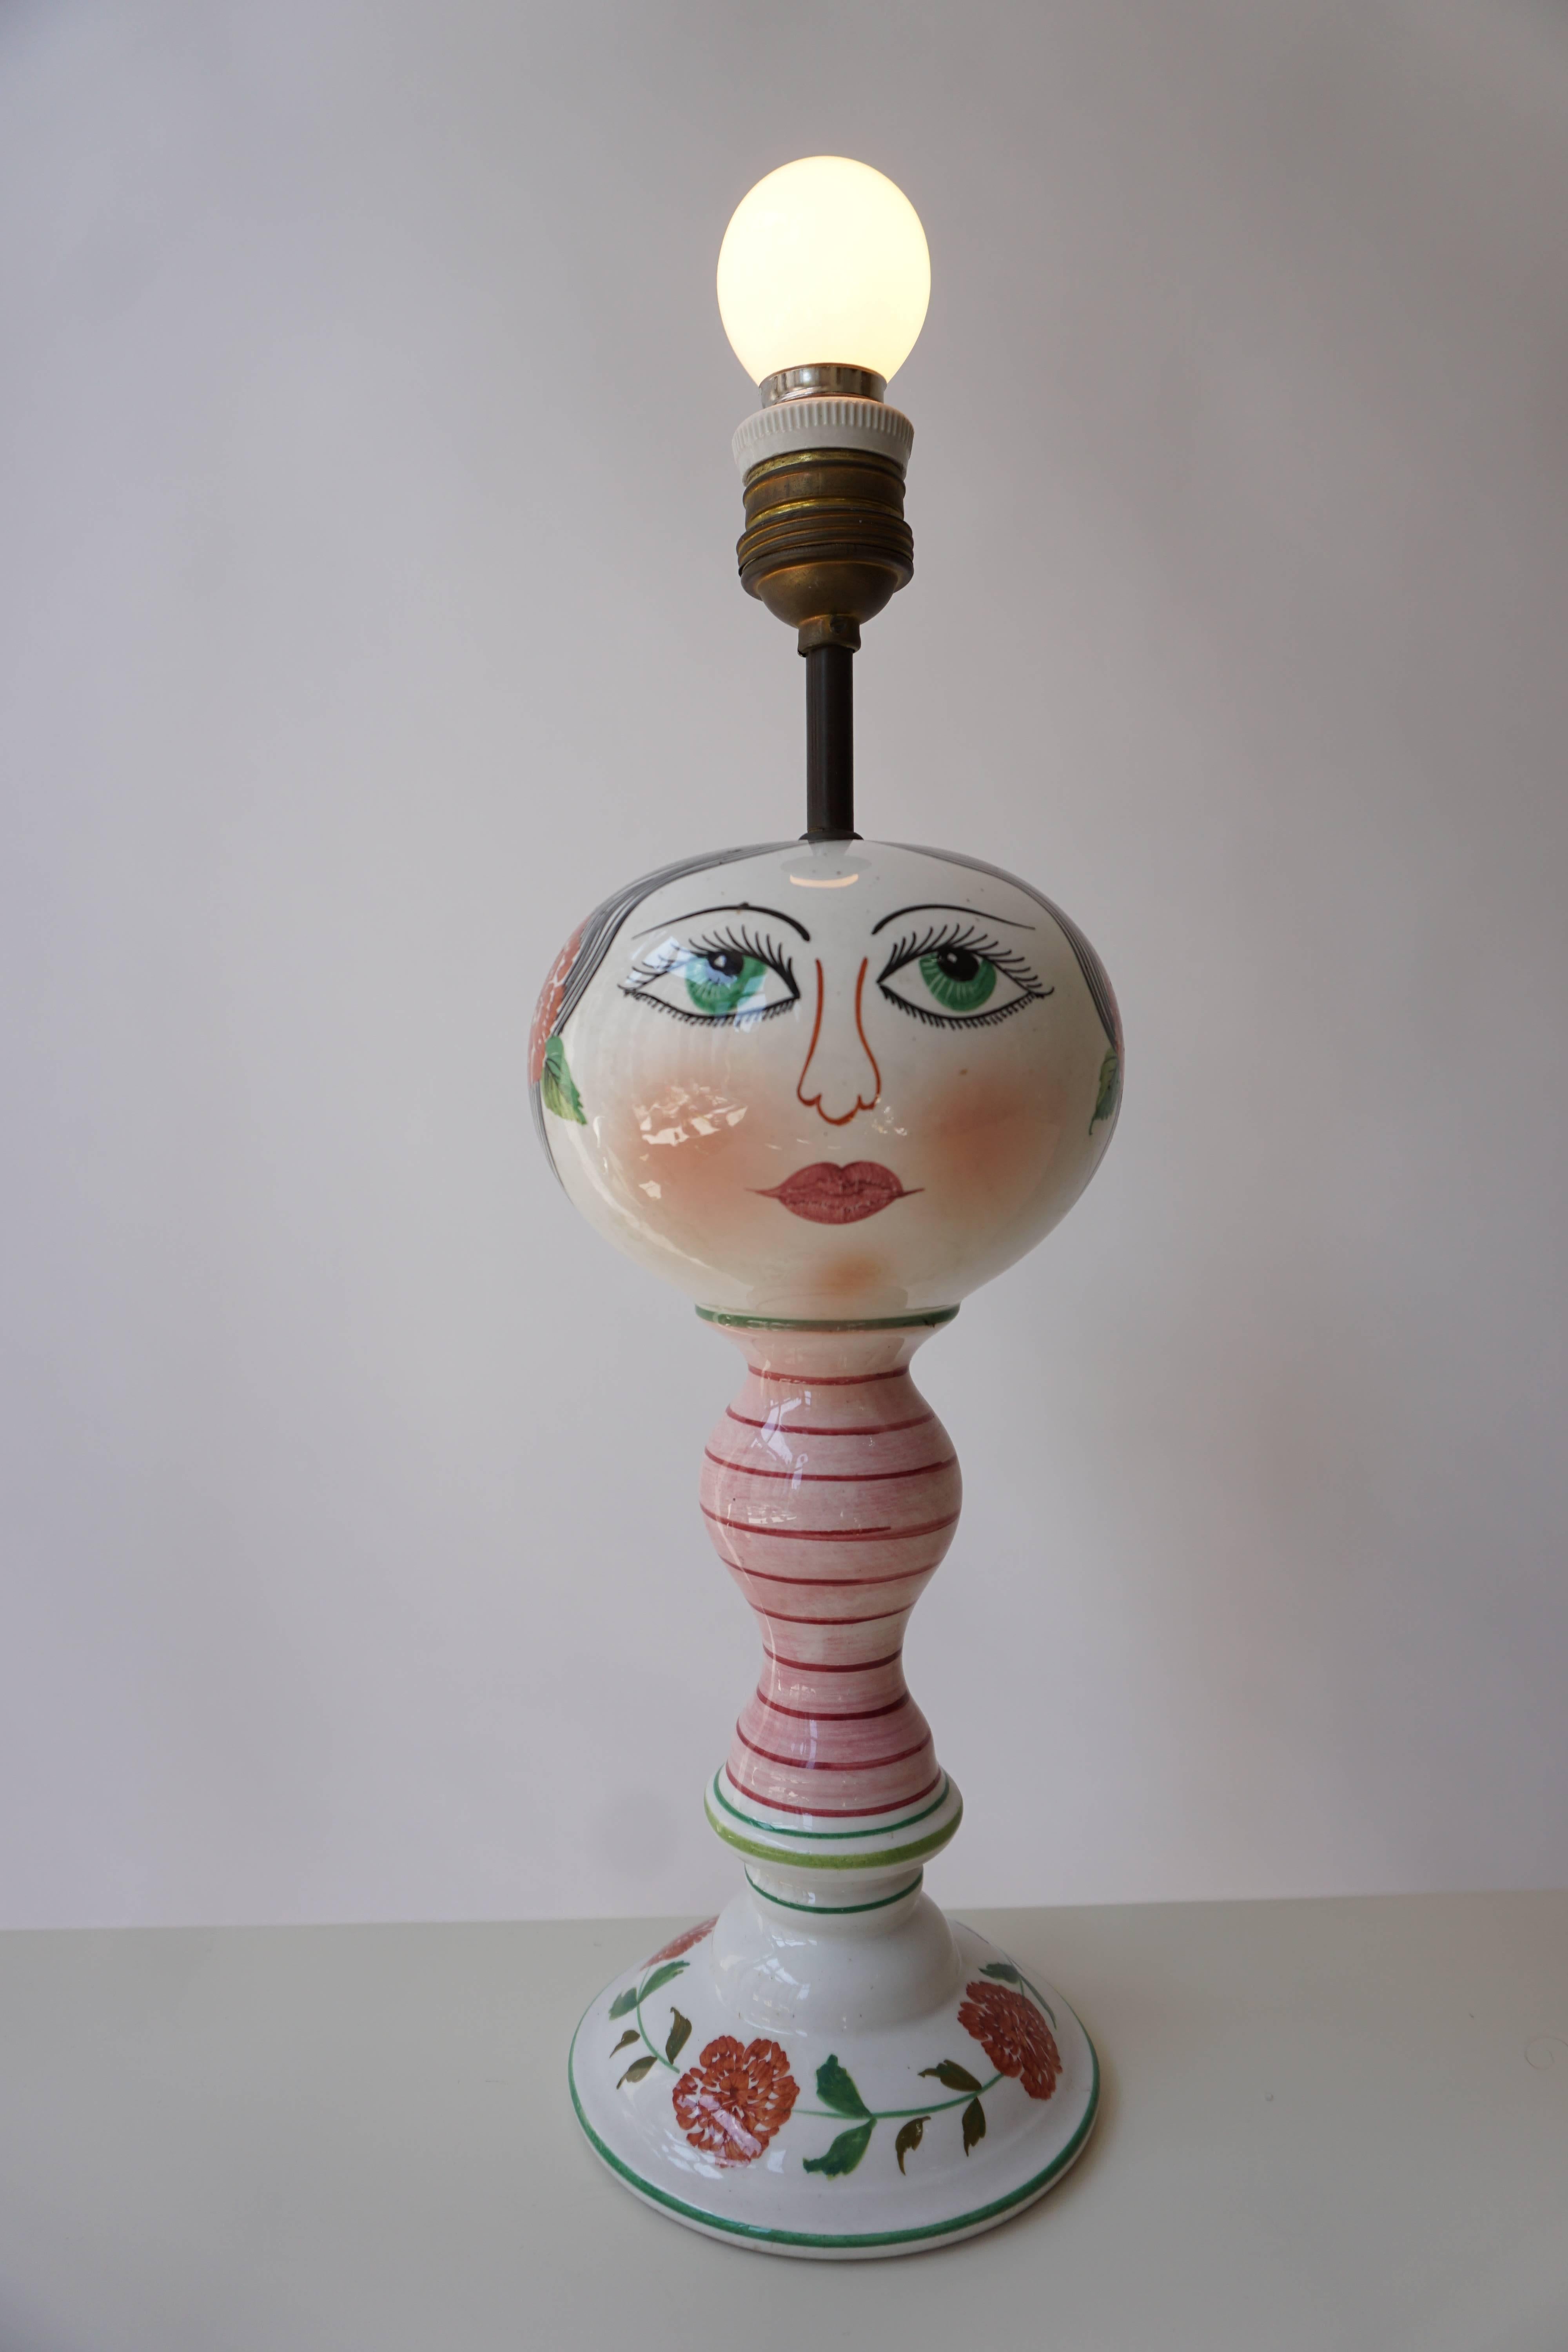 Italian table lamp.
Measures: Diameter 12 cm.
Height figure 28 cm.
Total height 37 cm.